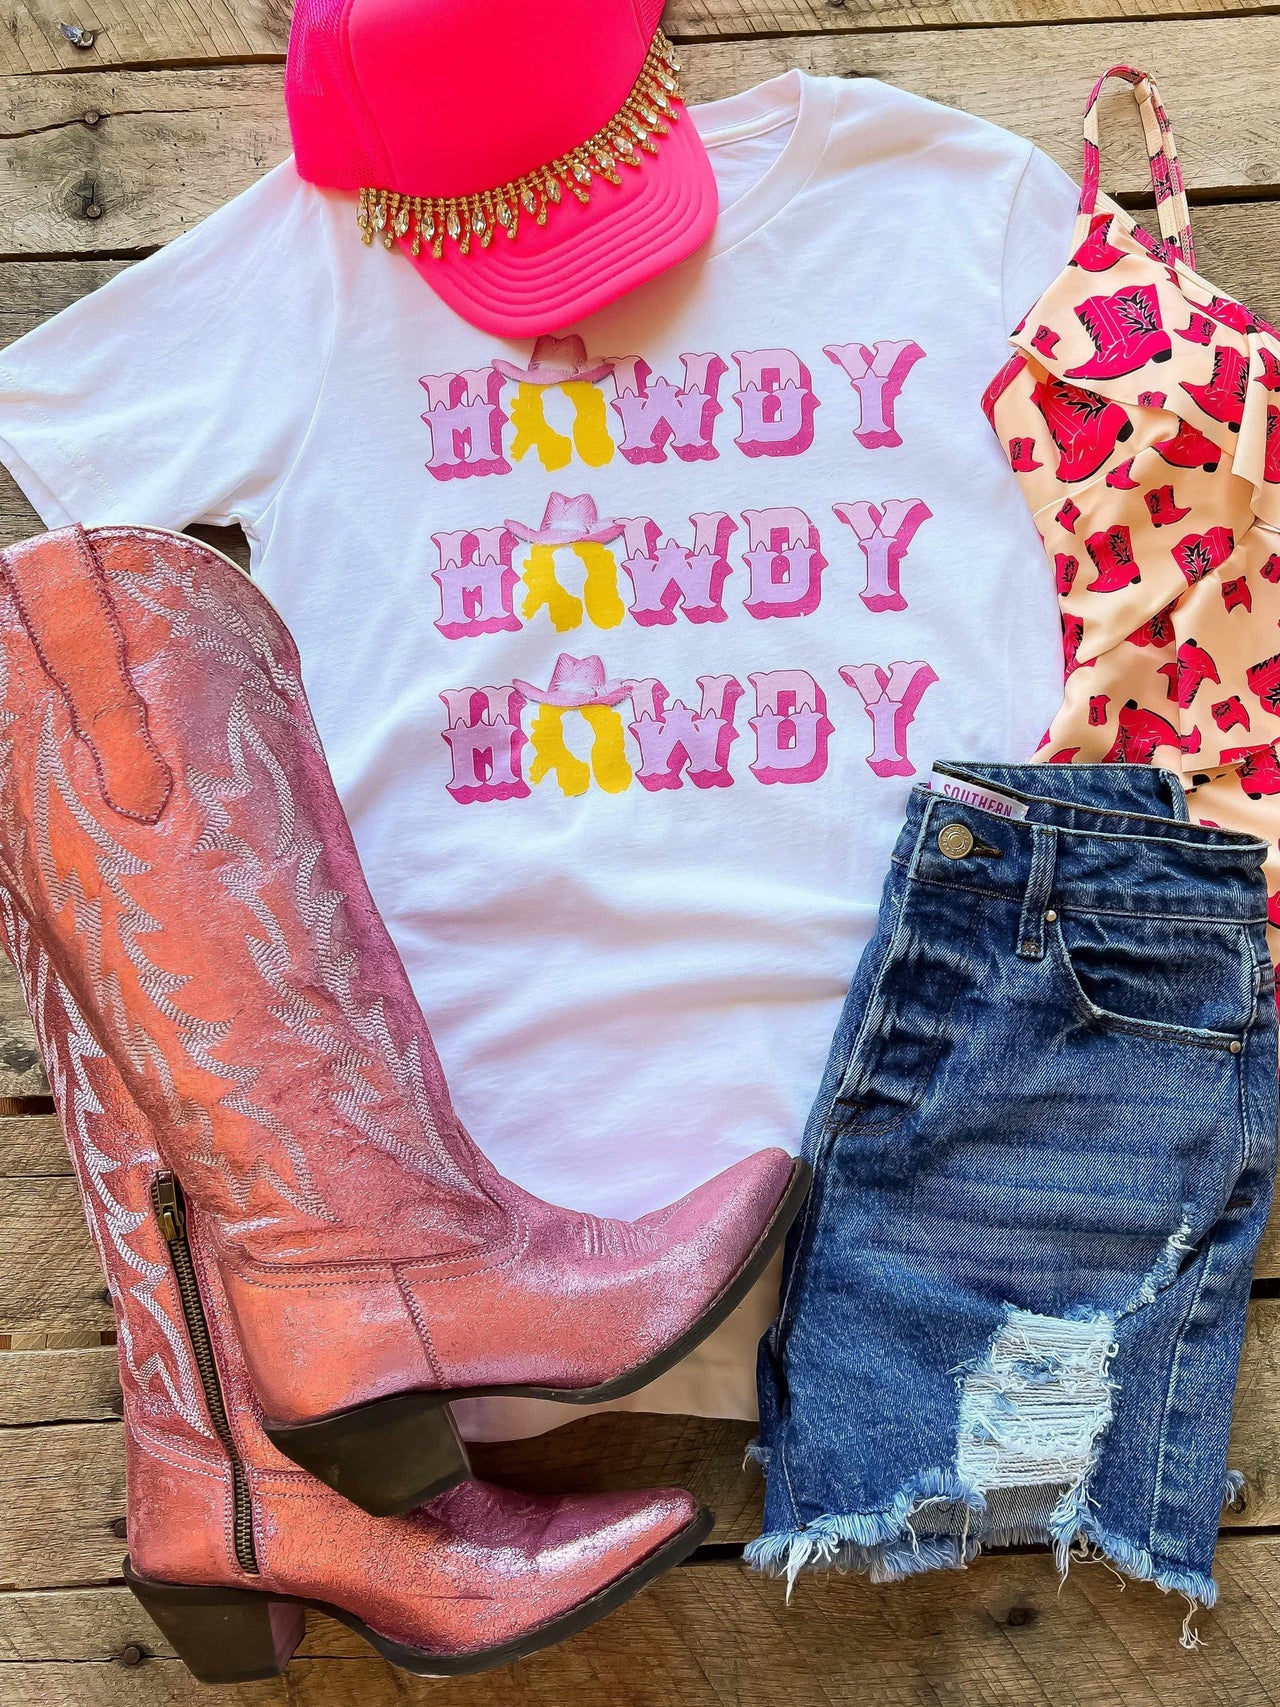 Howdy Dolly T-shirt